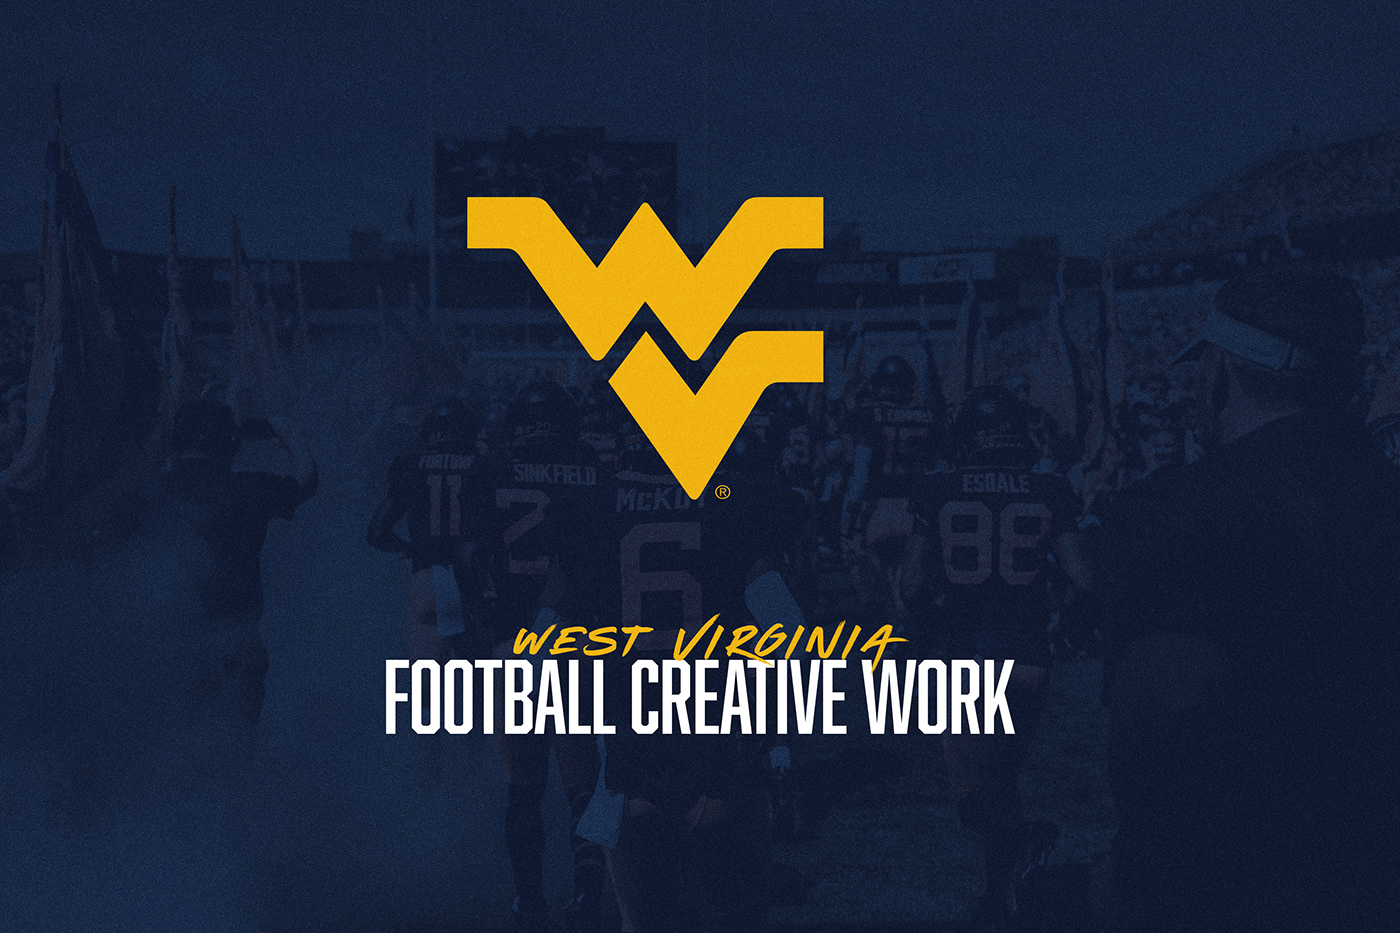 WVU mountaineers college football Jordan Herald design West Virginia